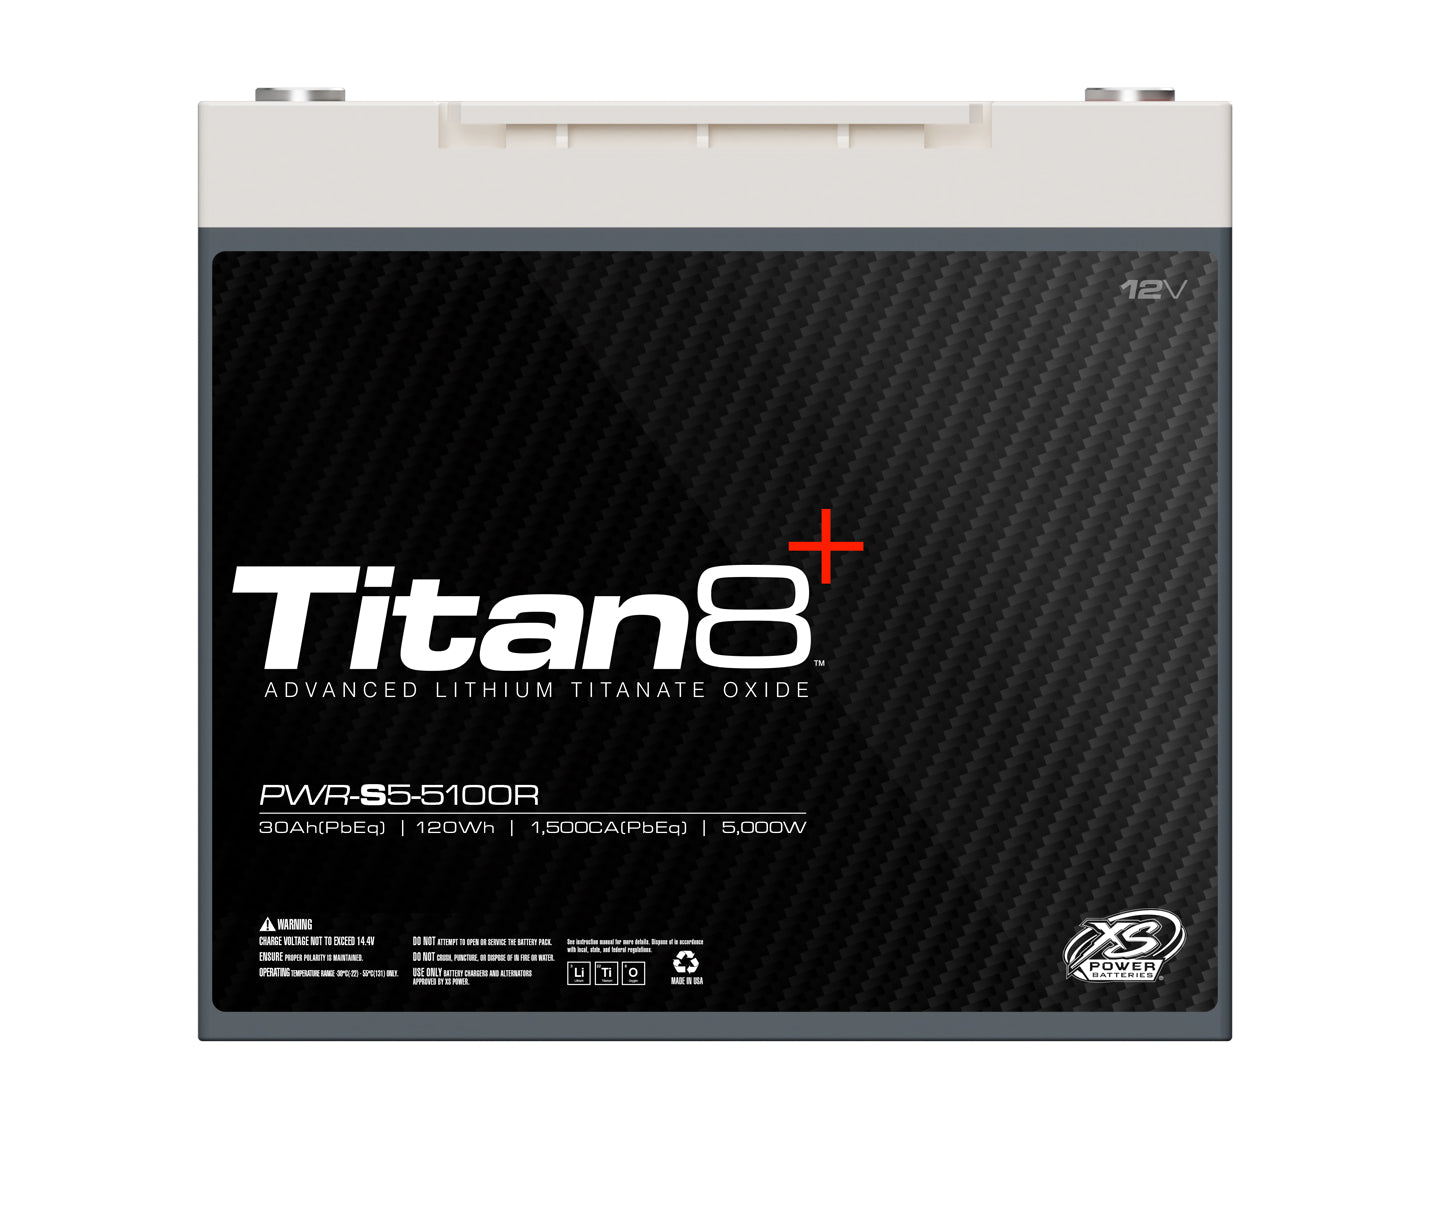 PWR-S5-5100R XS Power Titan8 12VDC Group 51R Lithium LTO Car Audio Vehicle Battery 5000W 120Wh